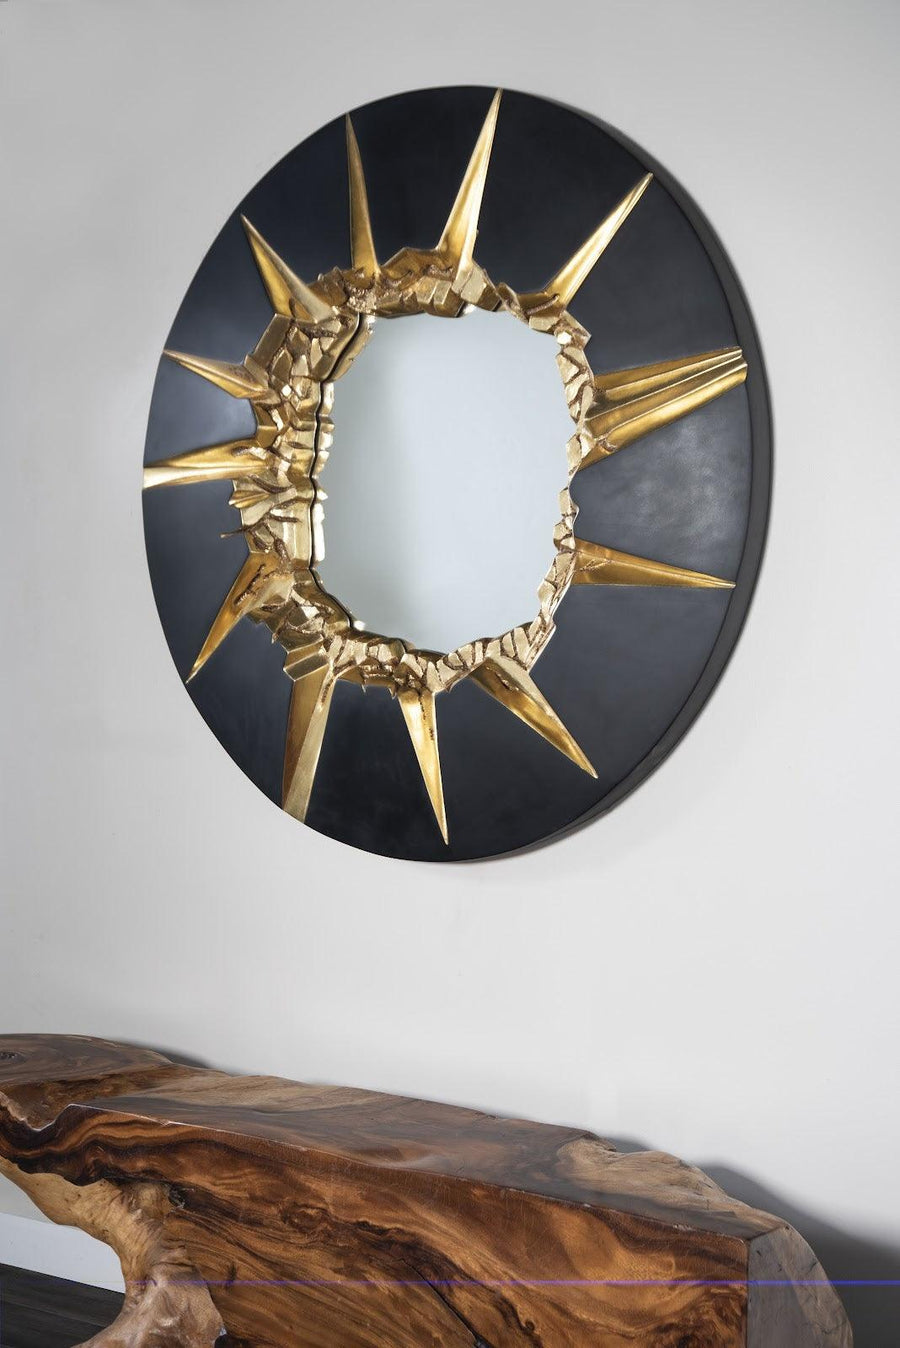 Circular Cracked Black and Gold Mirror - Maison Vogue